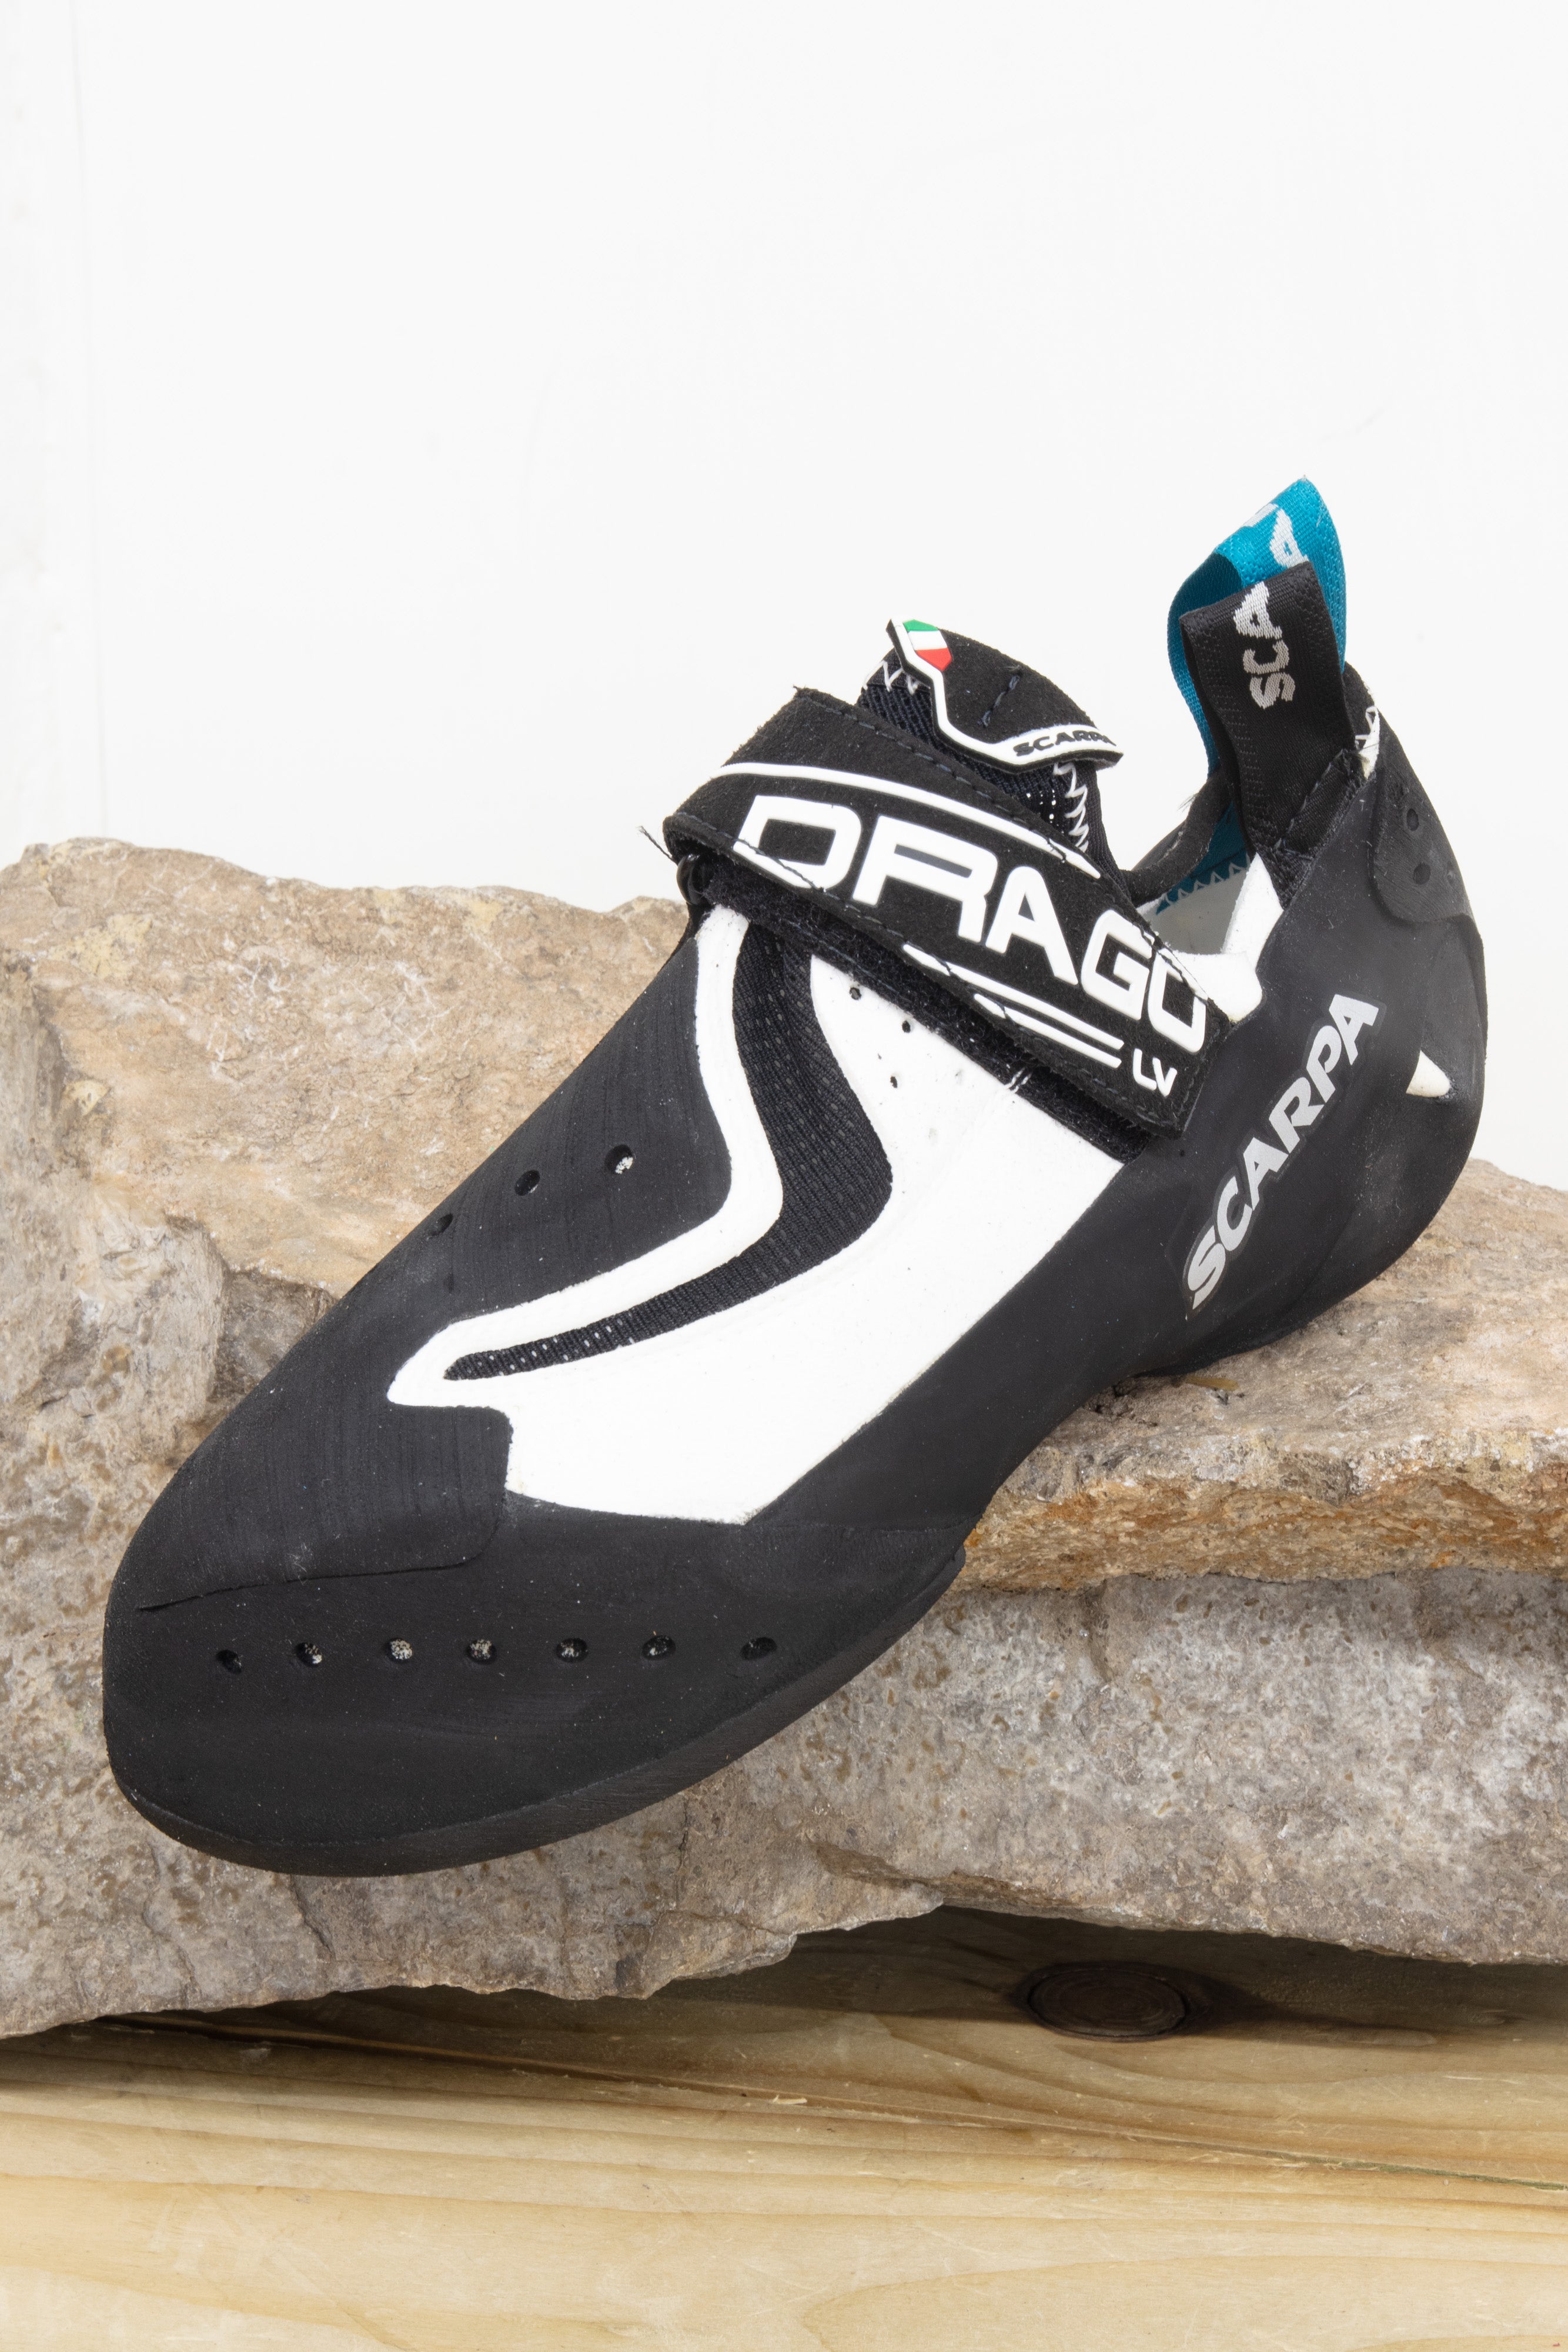 Item 788019 - Scarpa Drago - Climbing Shoes - Size 9